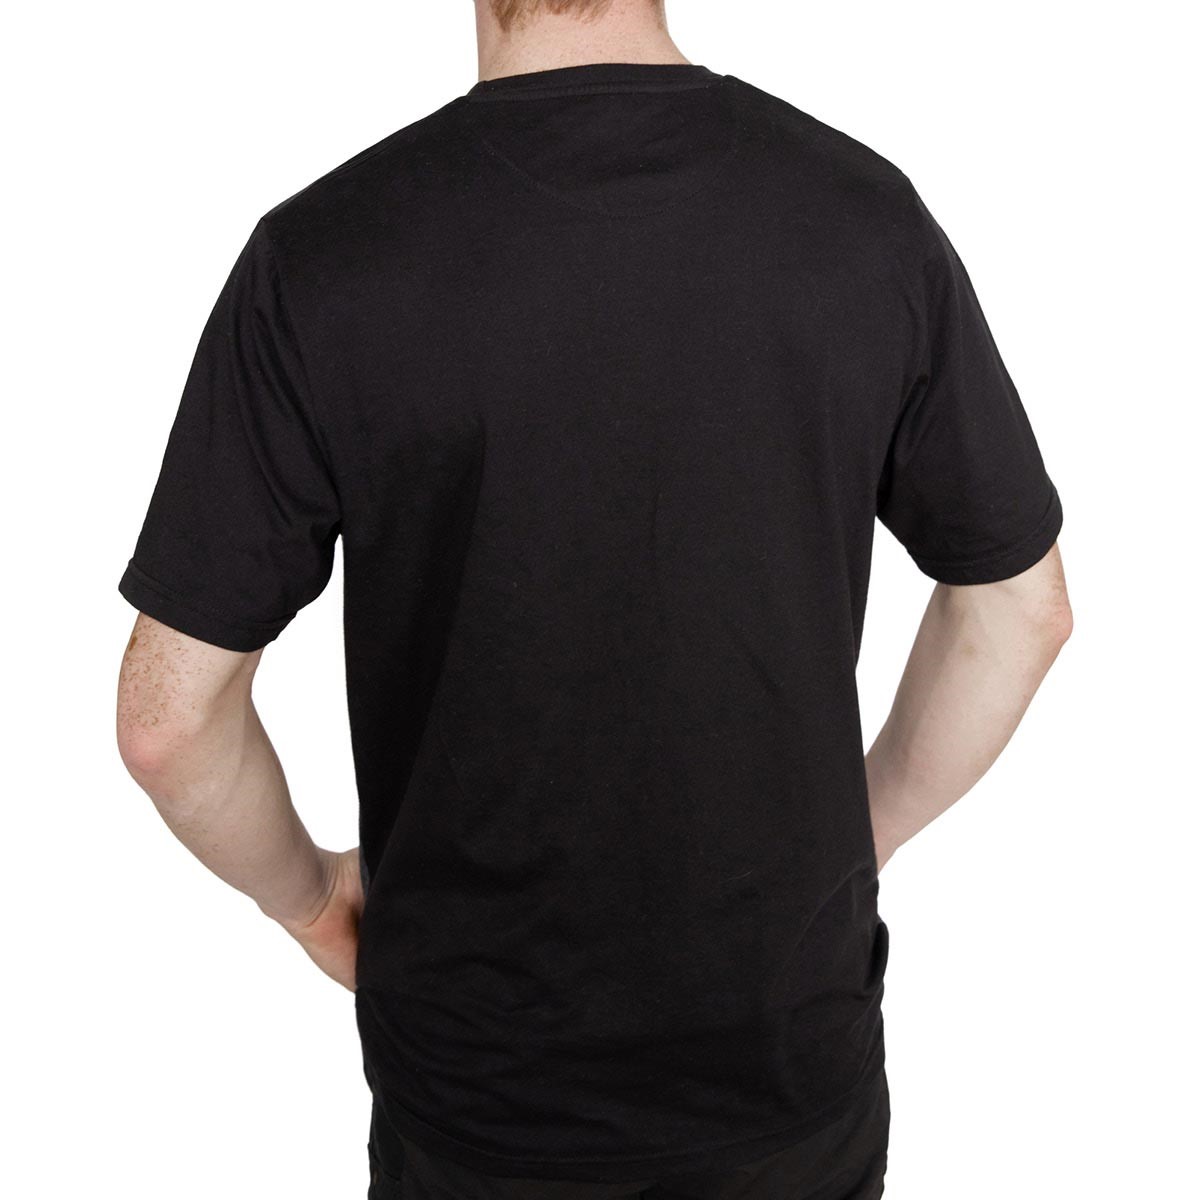 X-GRIP LIFESTYLE T-Shirt L schwarz/grau